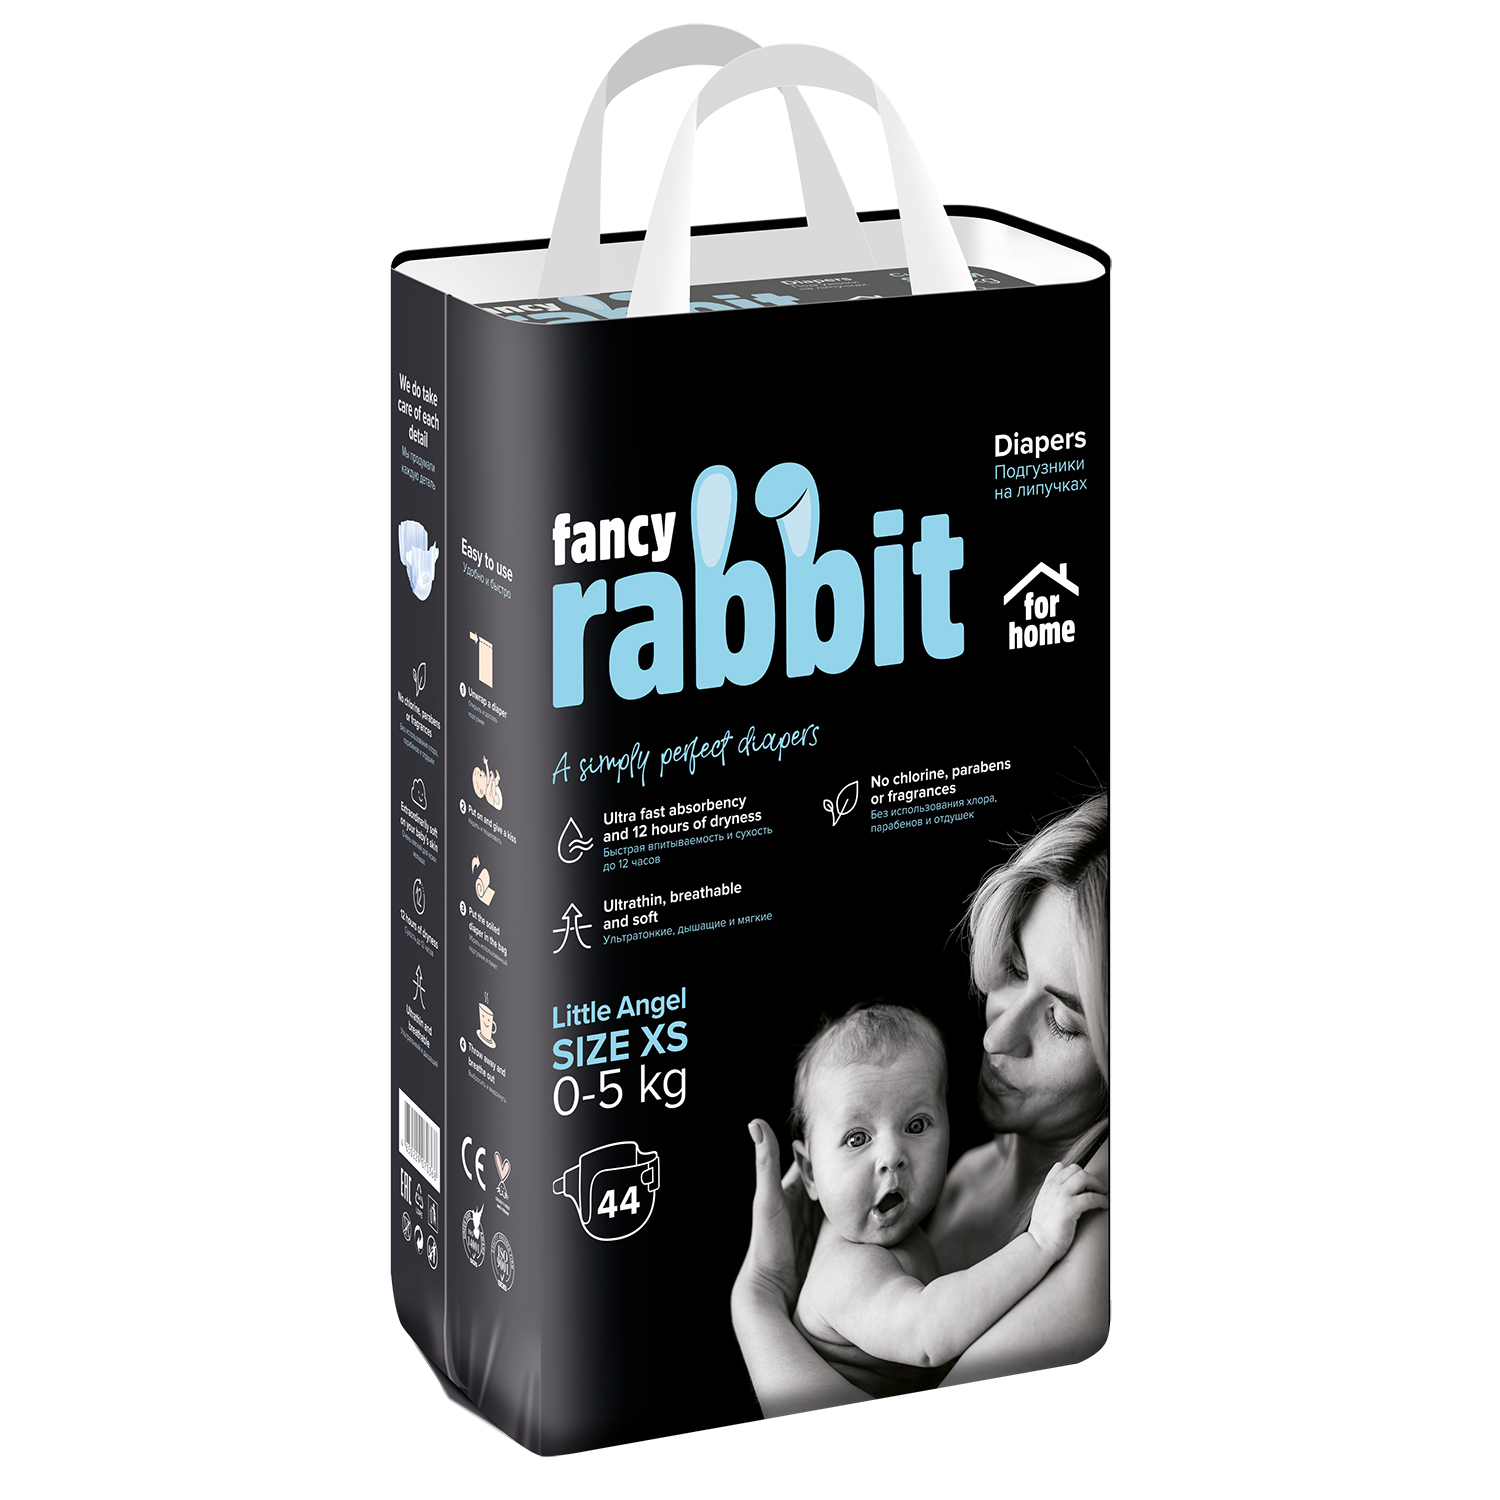 Подгузники Fancy Rabbit for home xs, 0-5 кг, 44 шт подгузники fancy rabbit for home xs 0 5 кг 44 шт